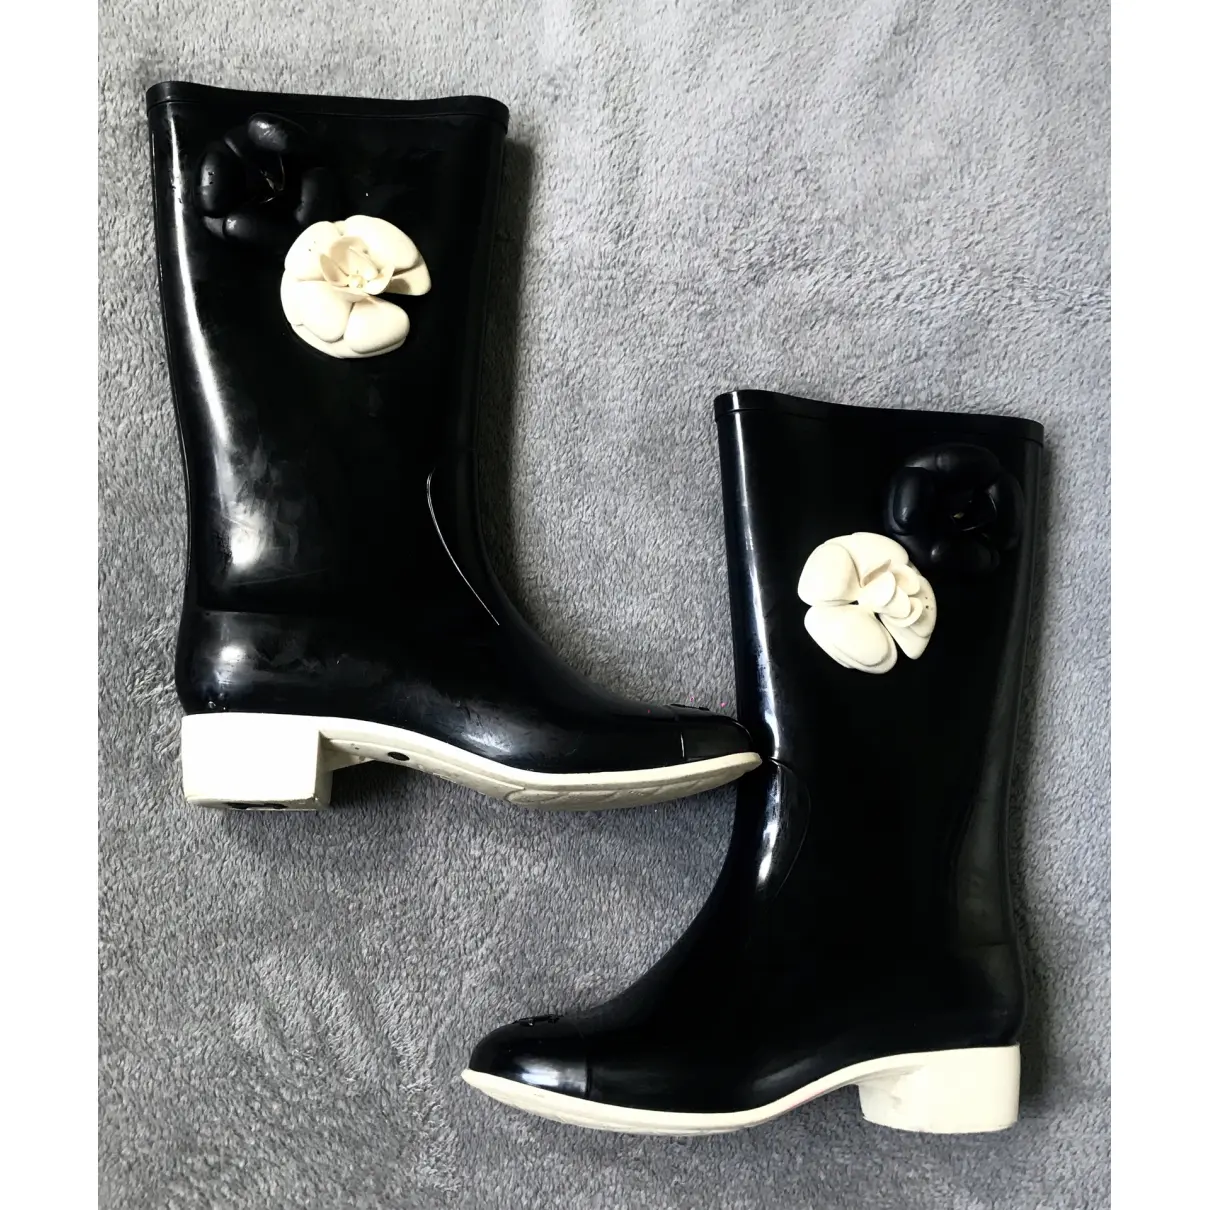 Buy Chanel Wellington boots online